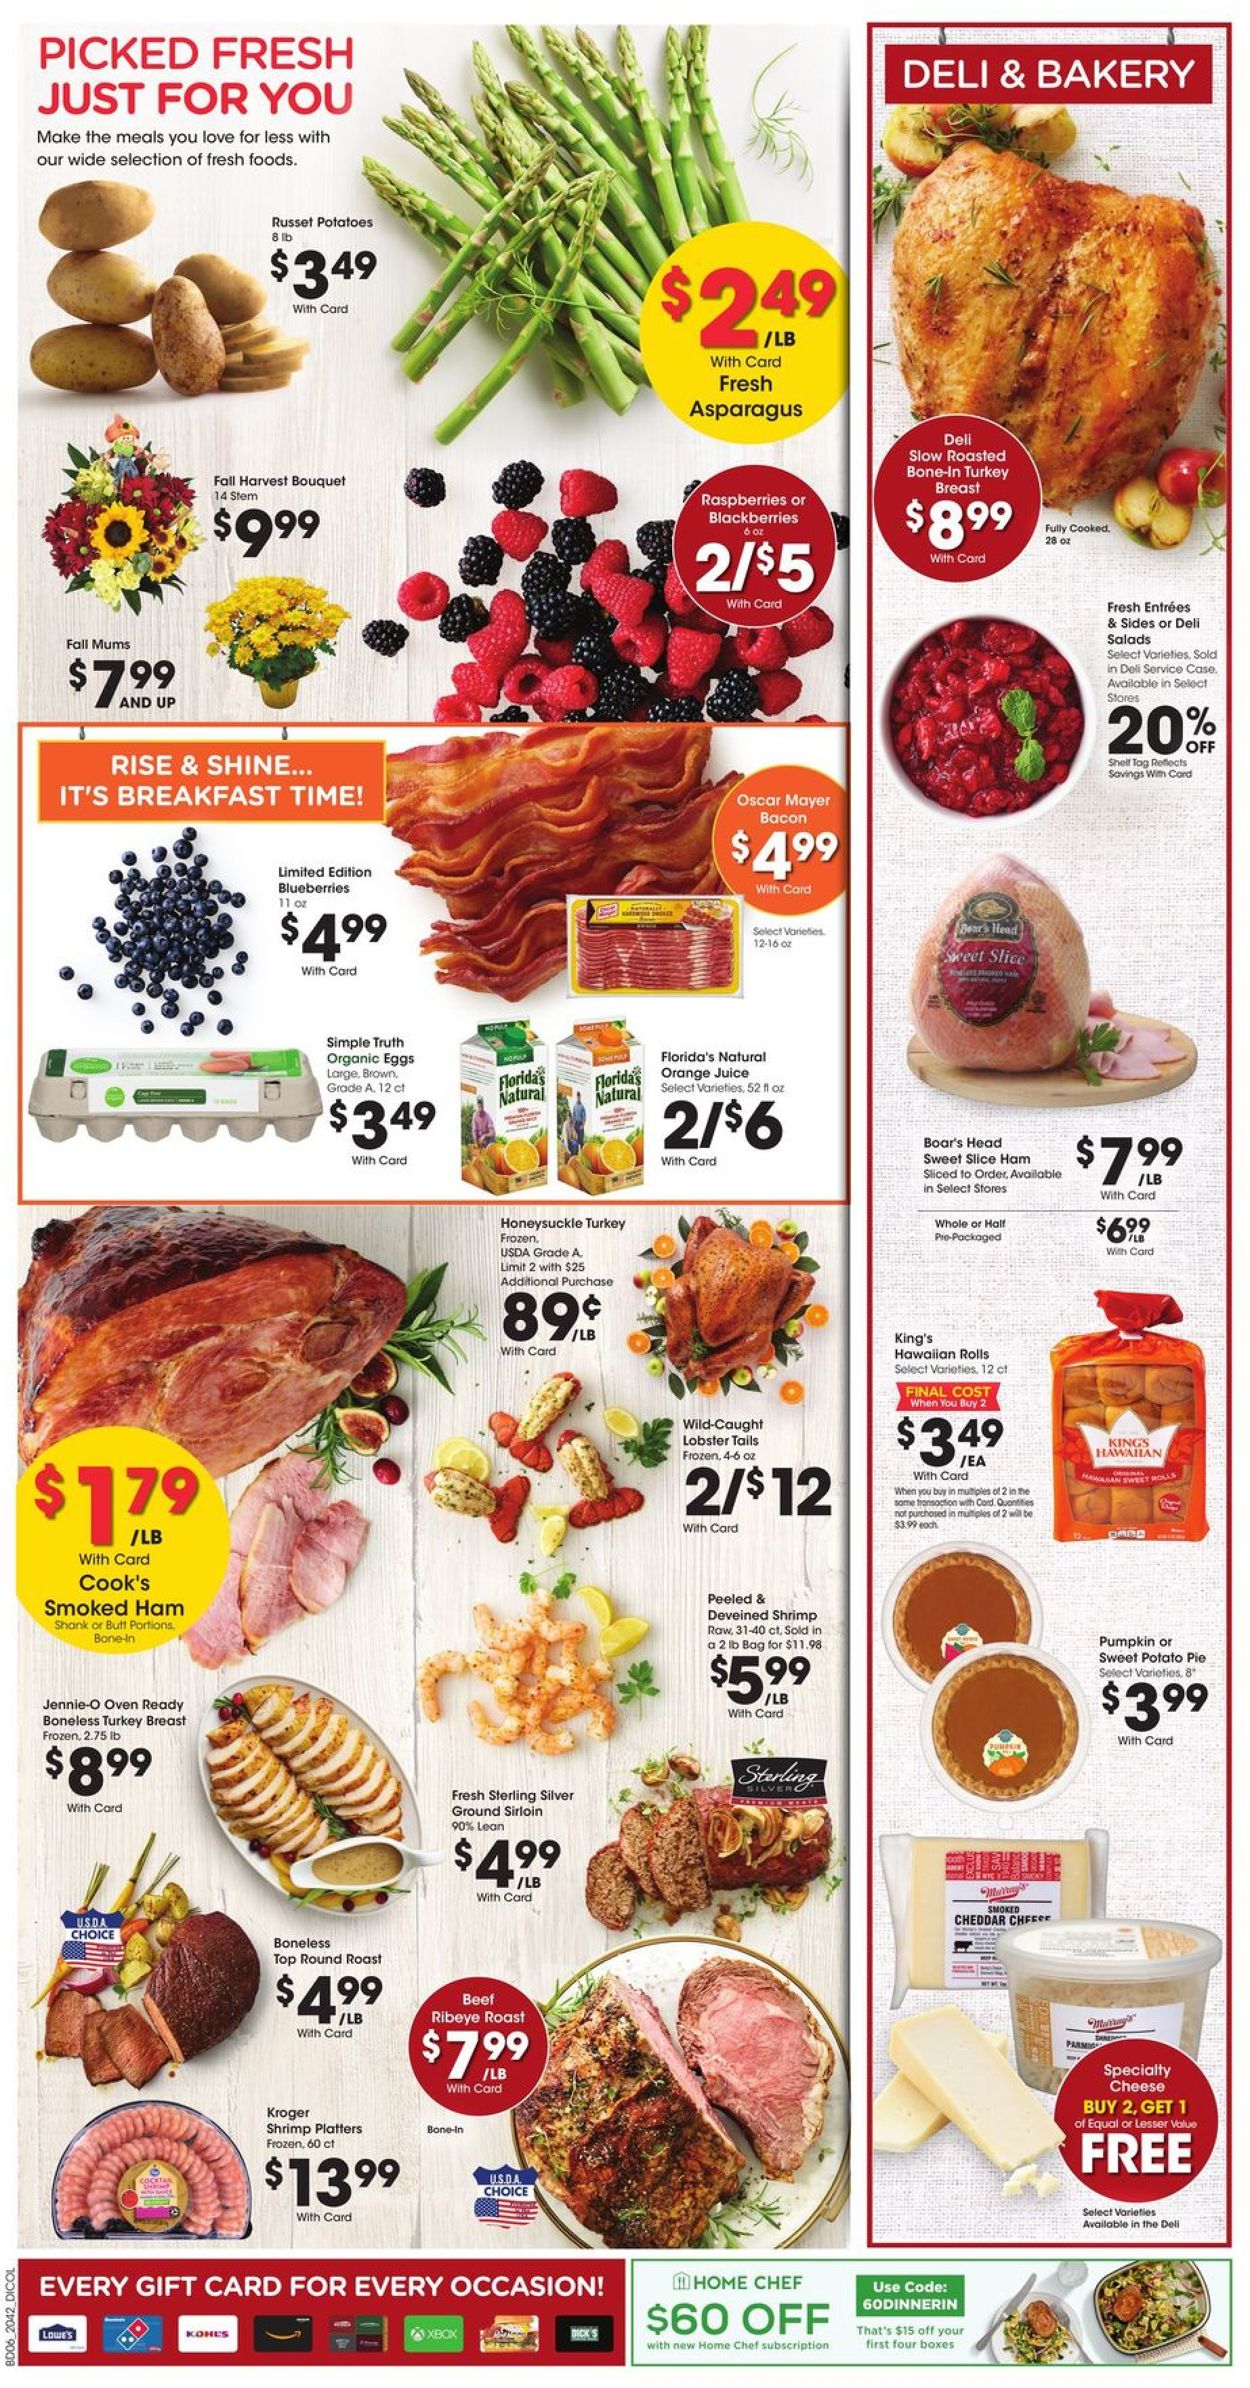 Catalogue Gerbes Super Markets Thanksgiving ad 2020 from 11/18/2020